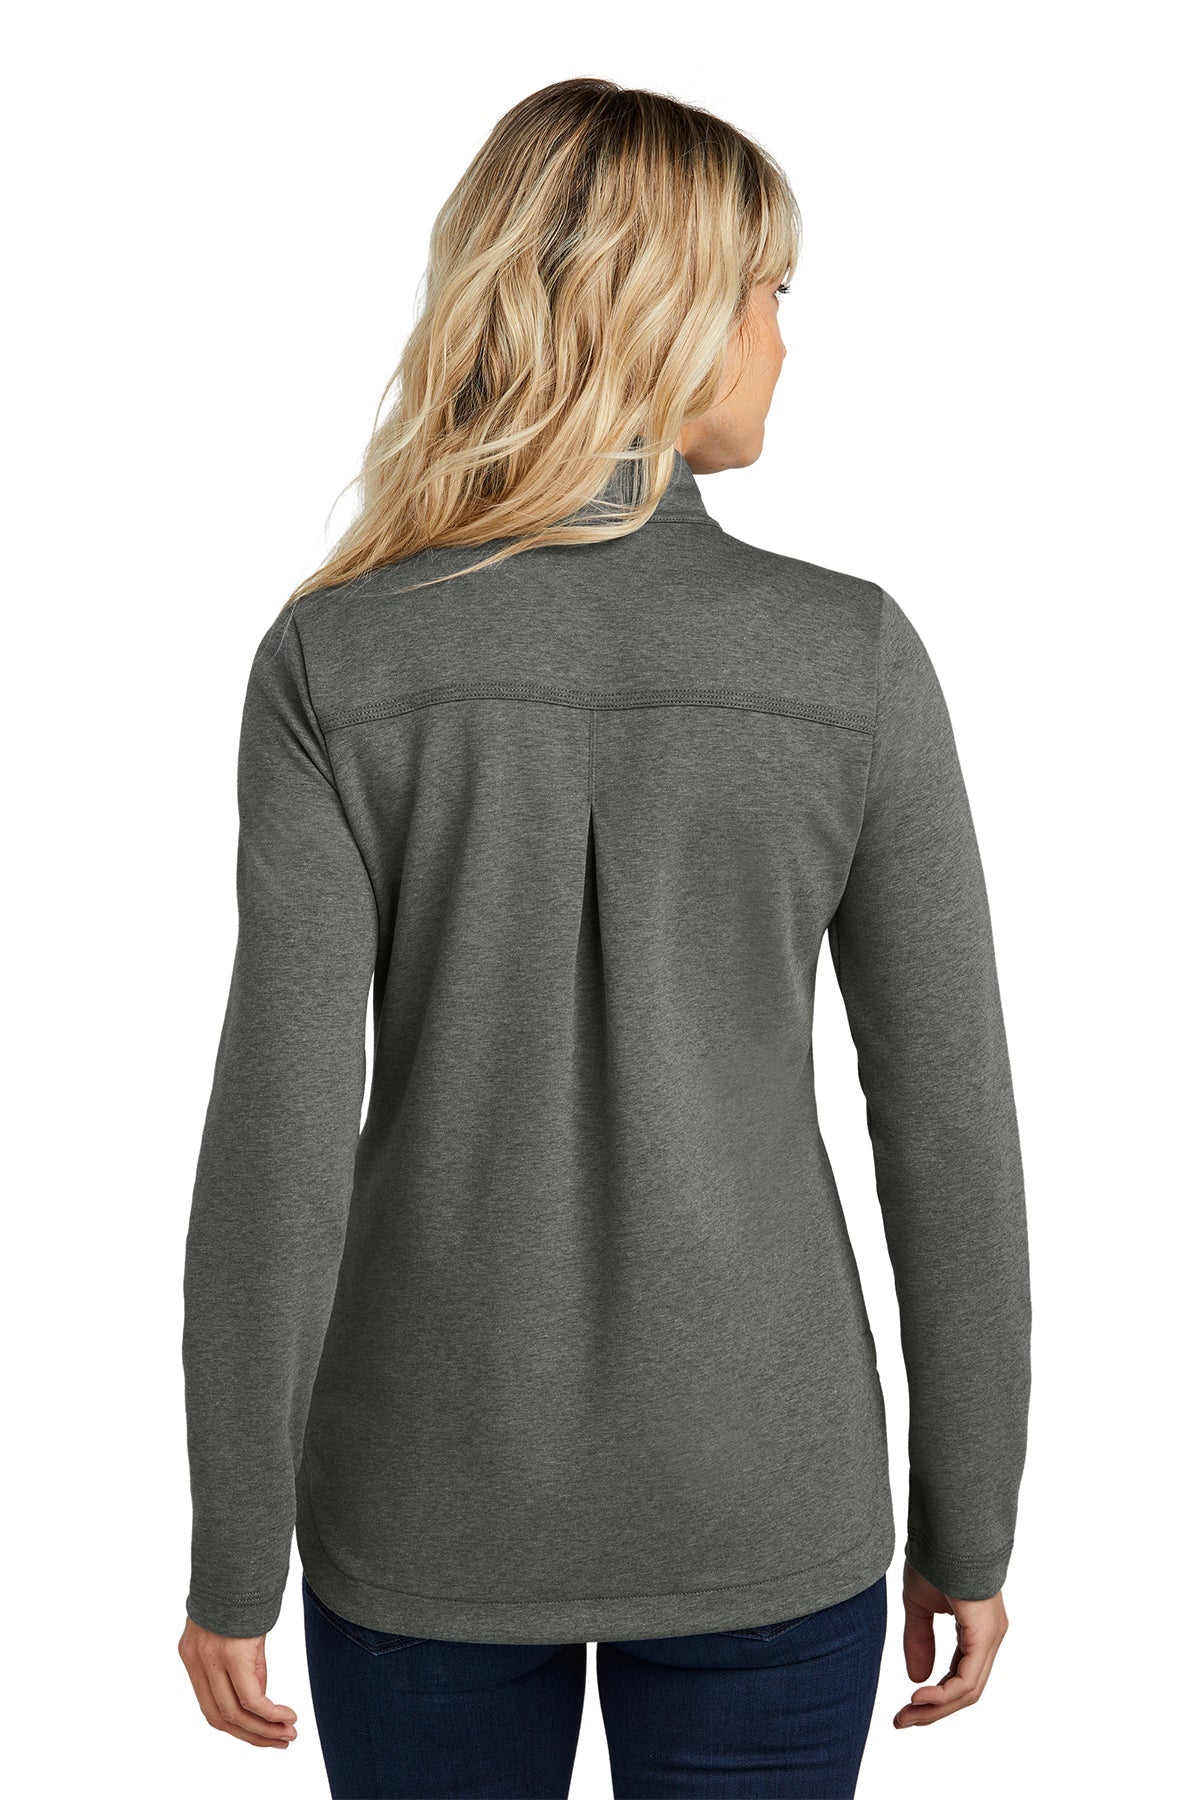 TravisMathew Ladies Coveside Custom Zip Sweatshirts, Dark Grey Heather